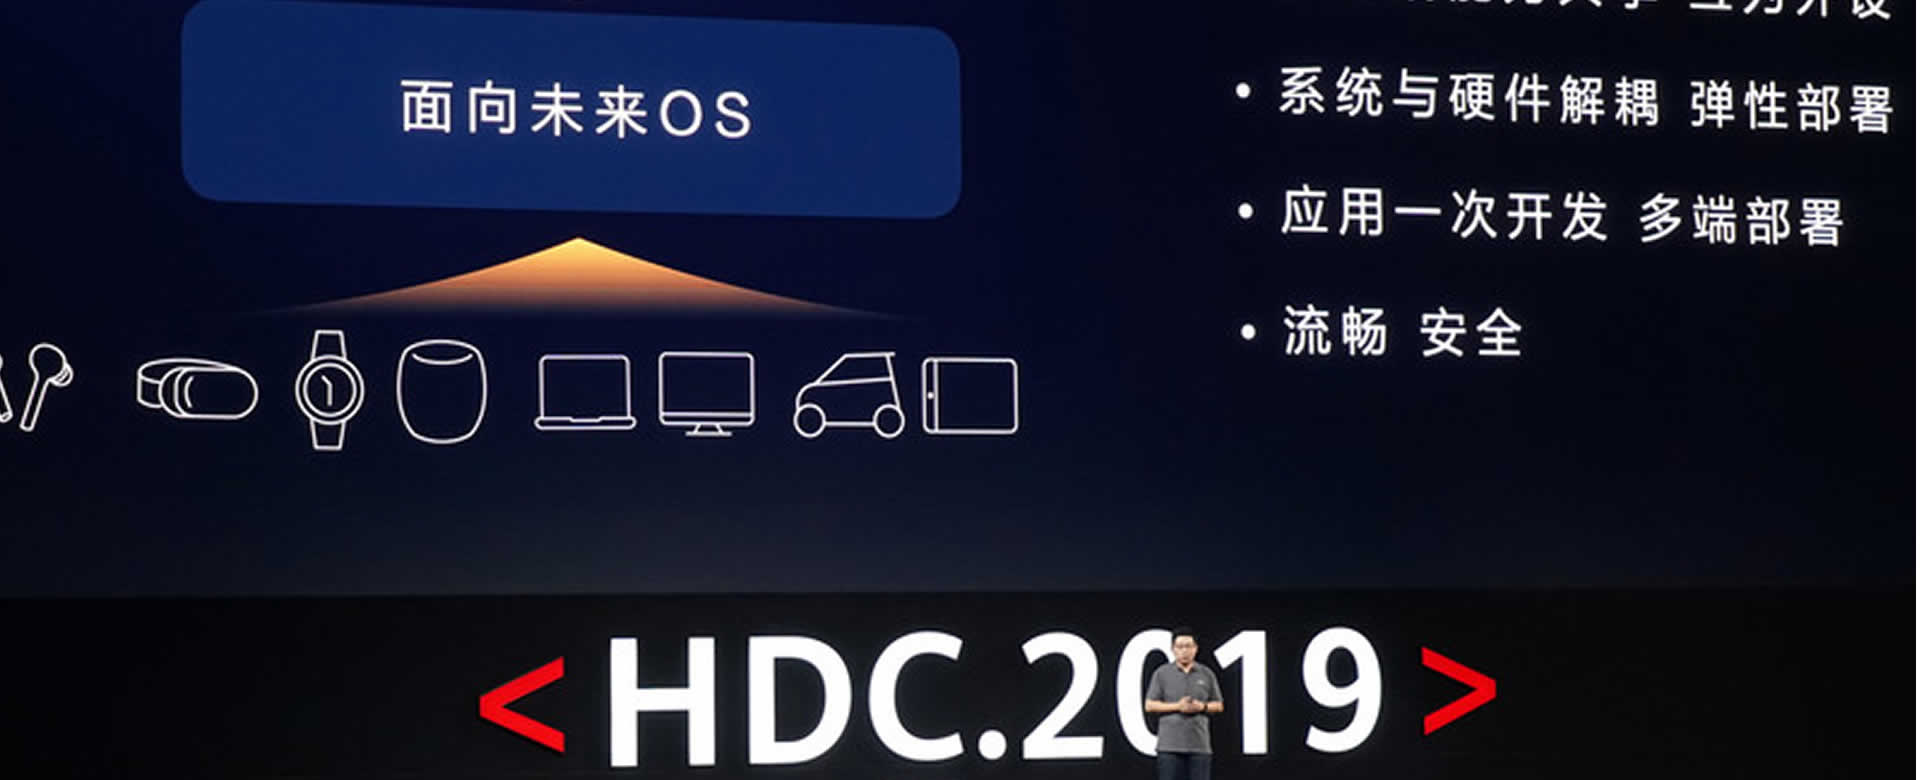 Huawei lanzamiento sistema operativo